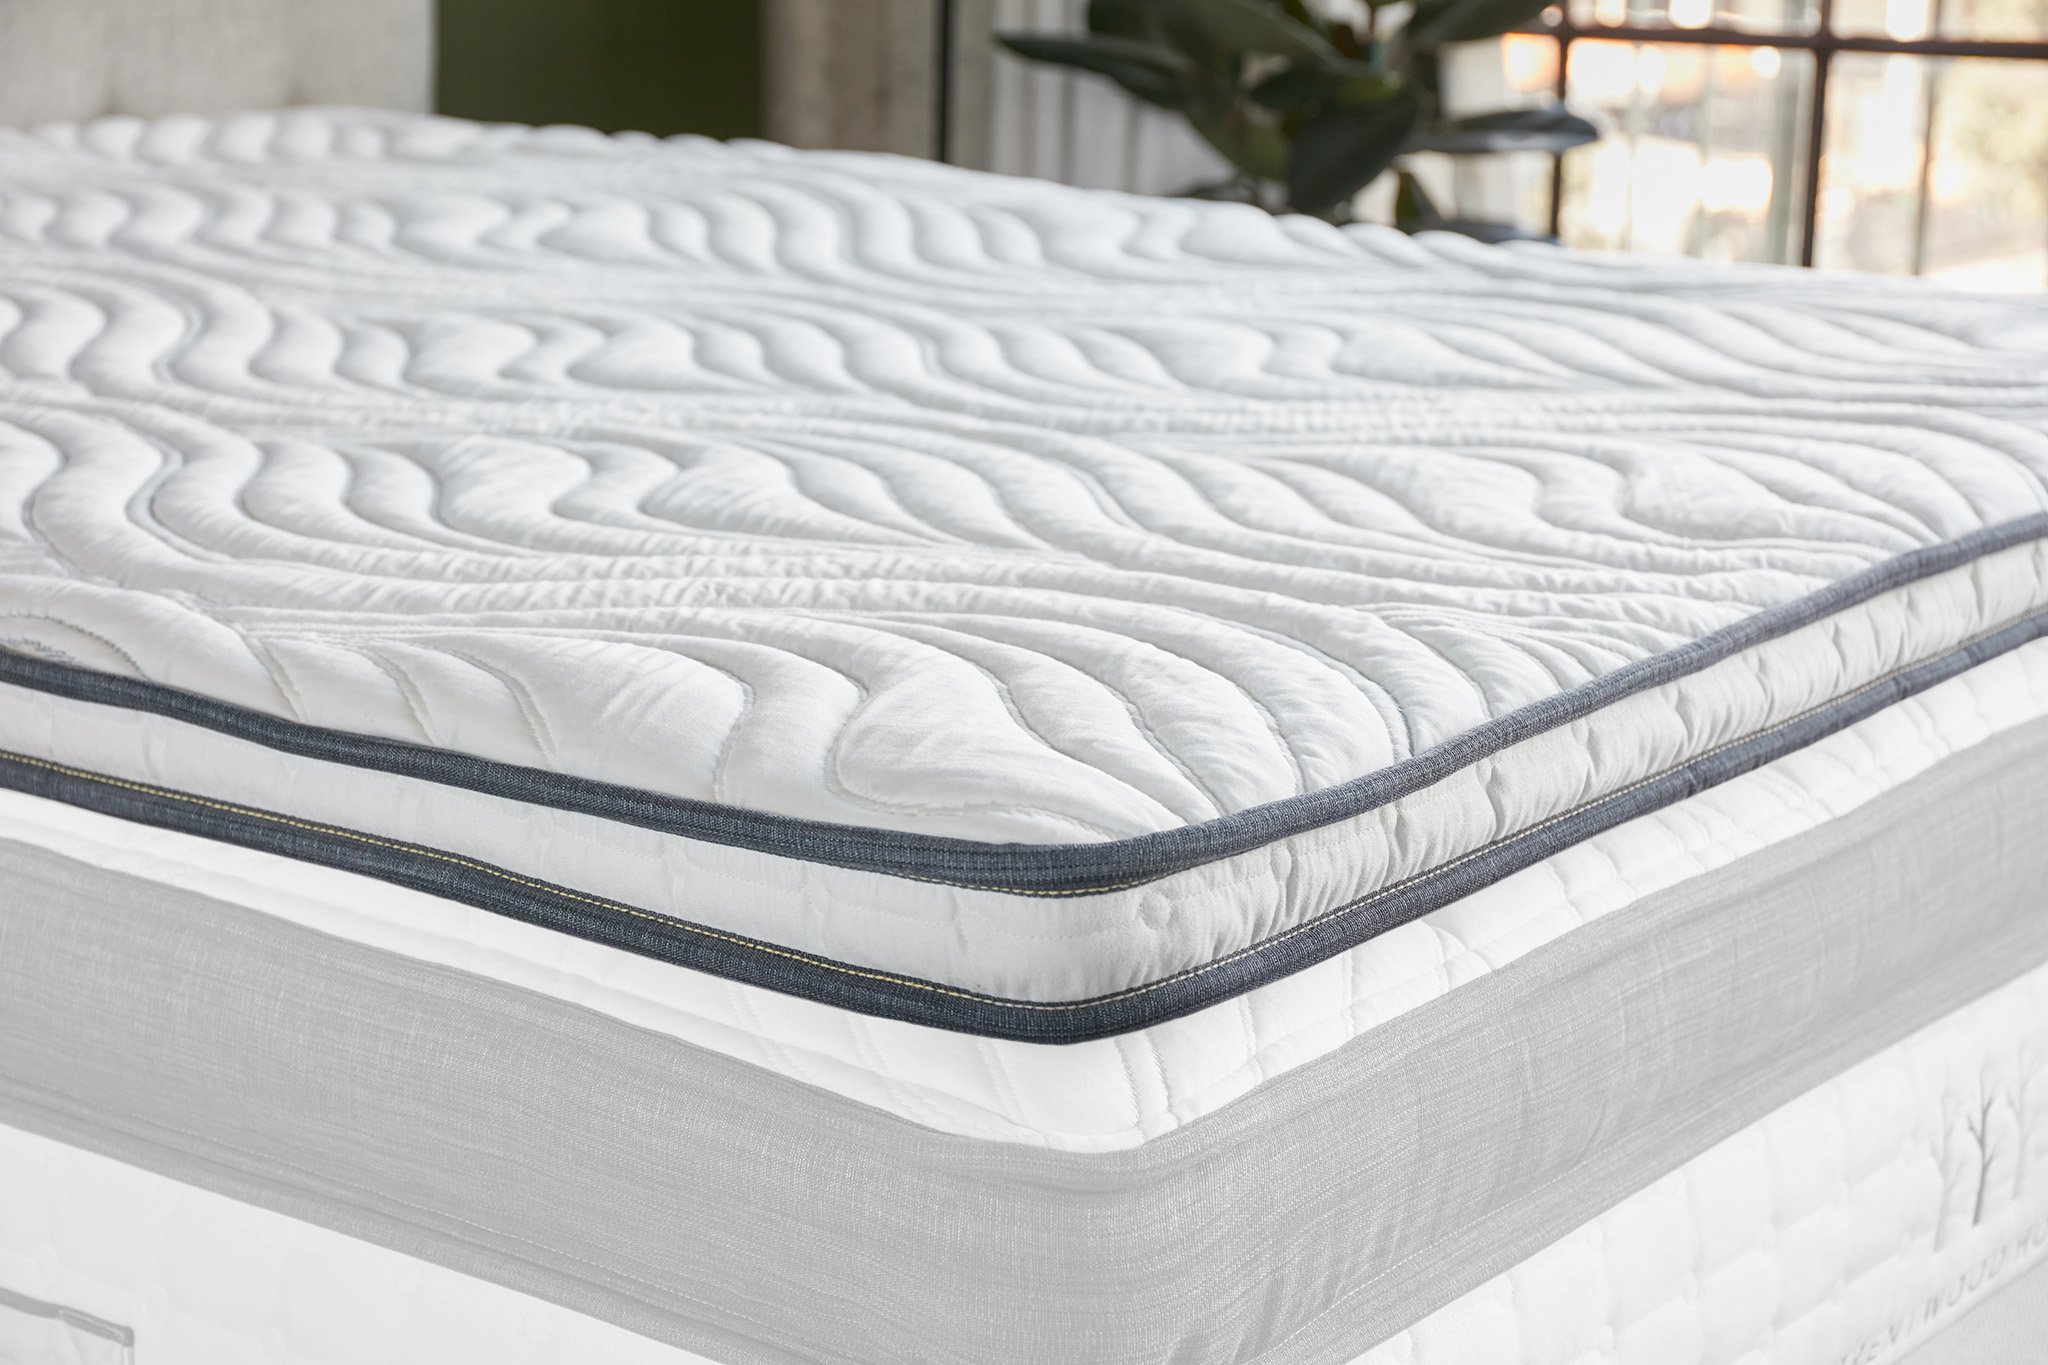 15cm memory foam mattress topper